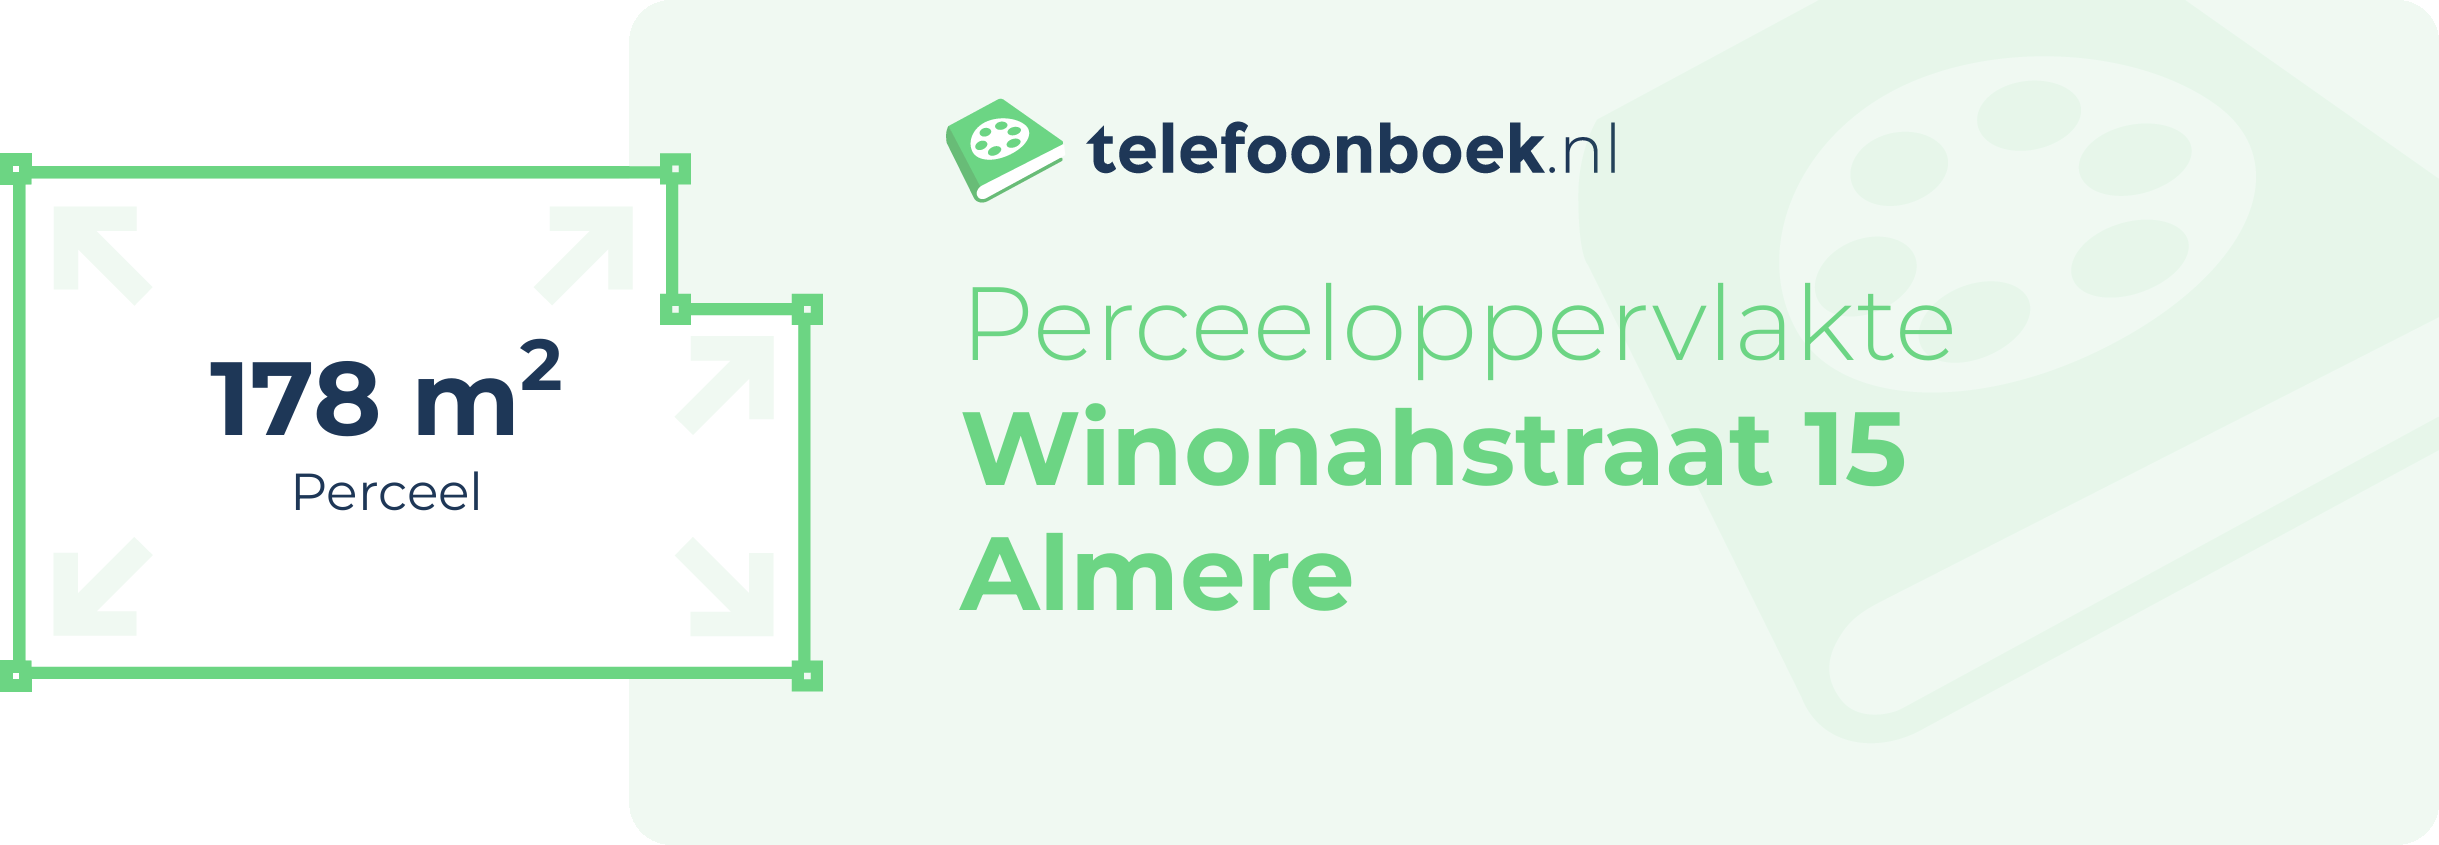 Perceeloppervlakte Winonahstraat 15 Almere